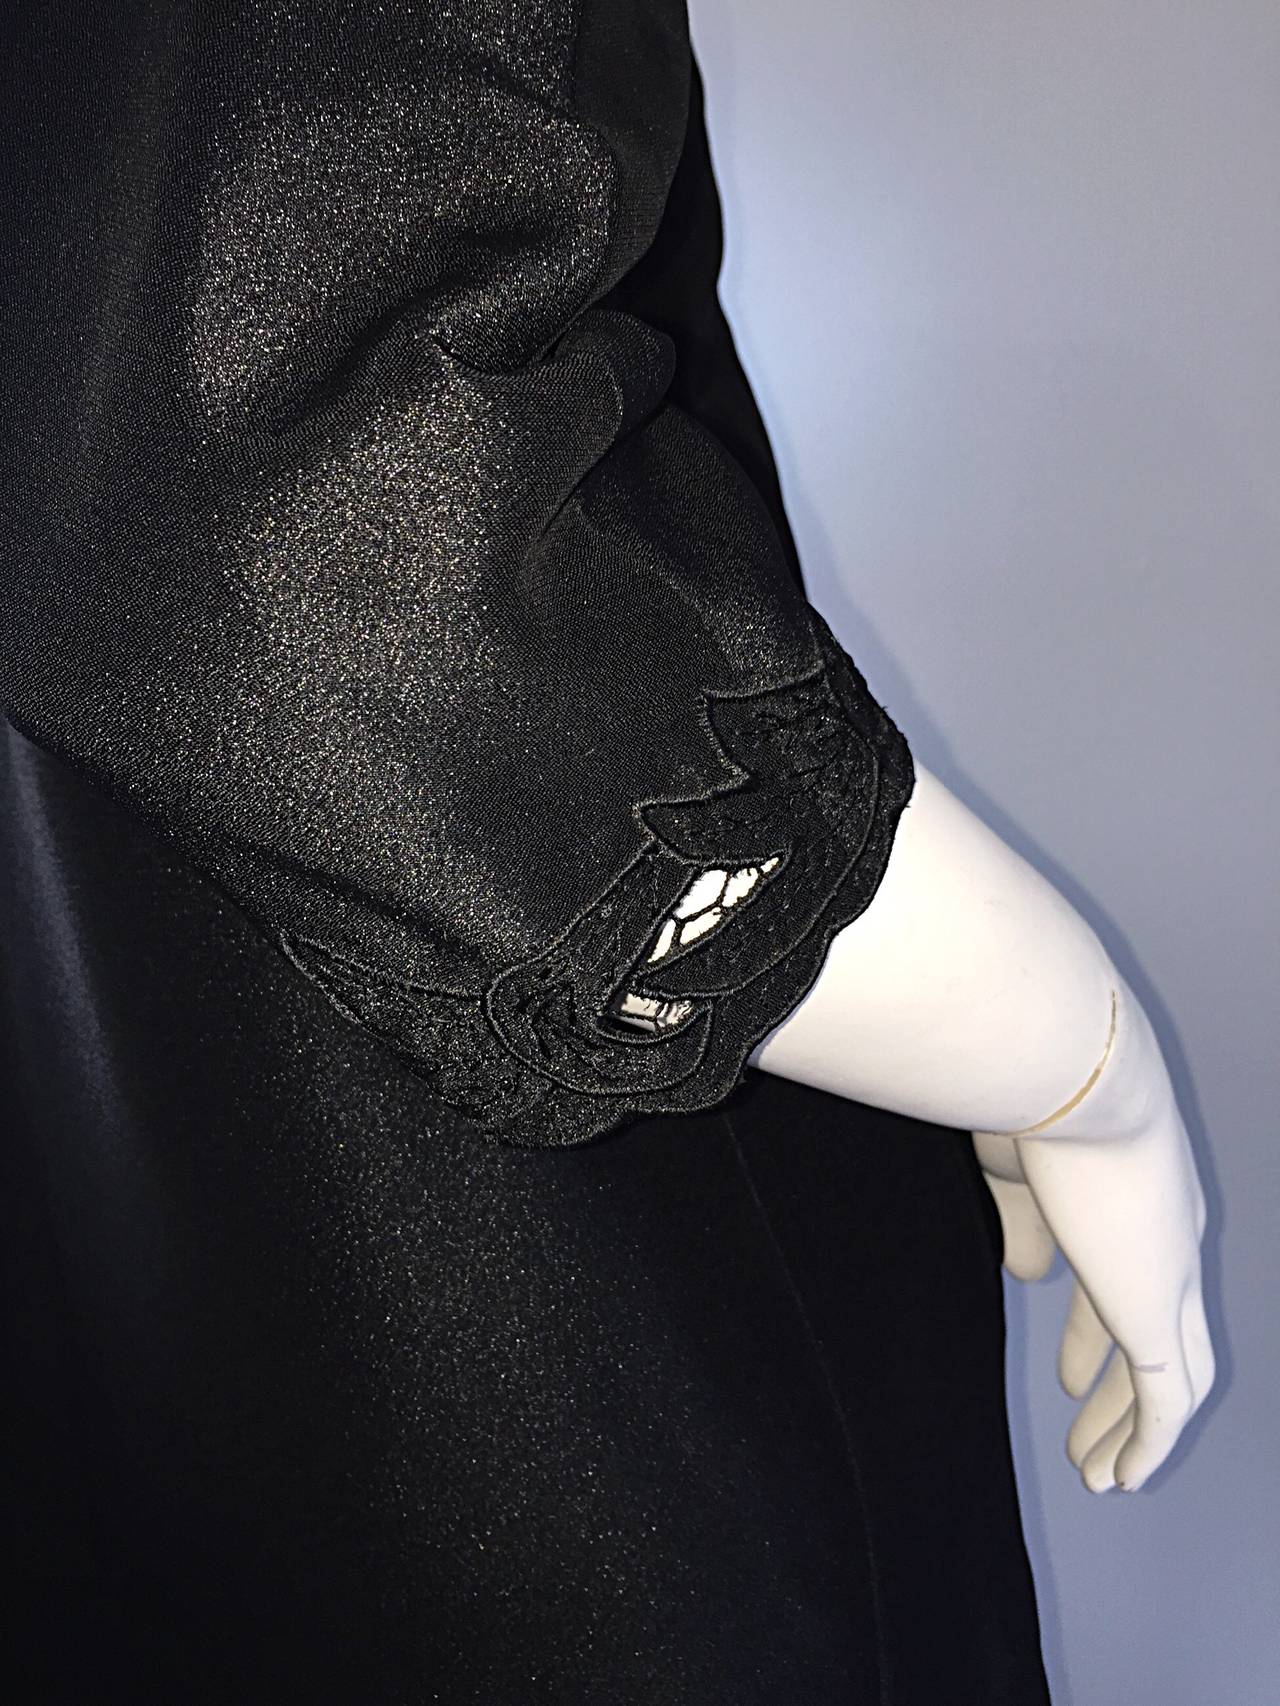 Chic 1940s Black Duster / Opera Jacket w/ Crochet Details + Scalloped Edges For Sale 1